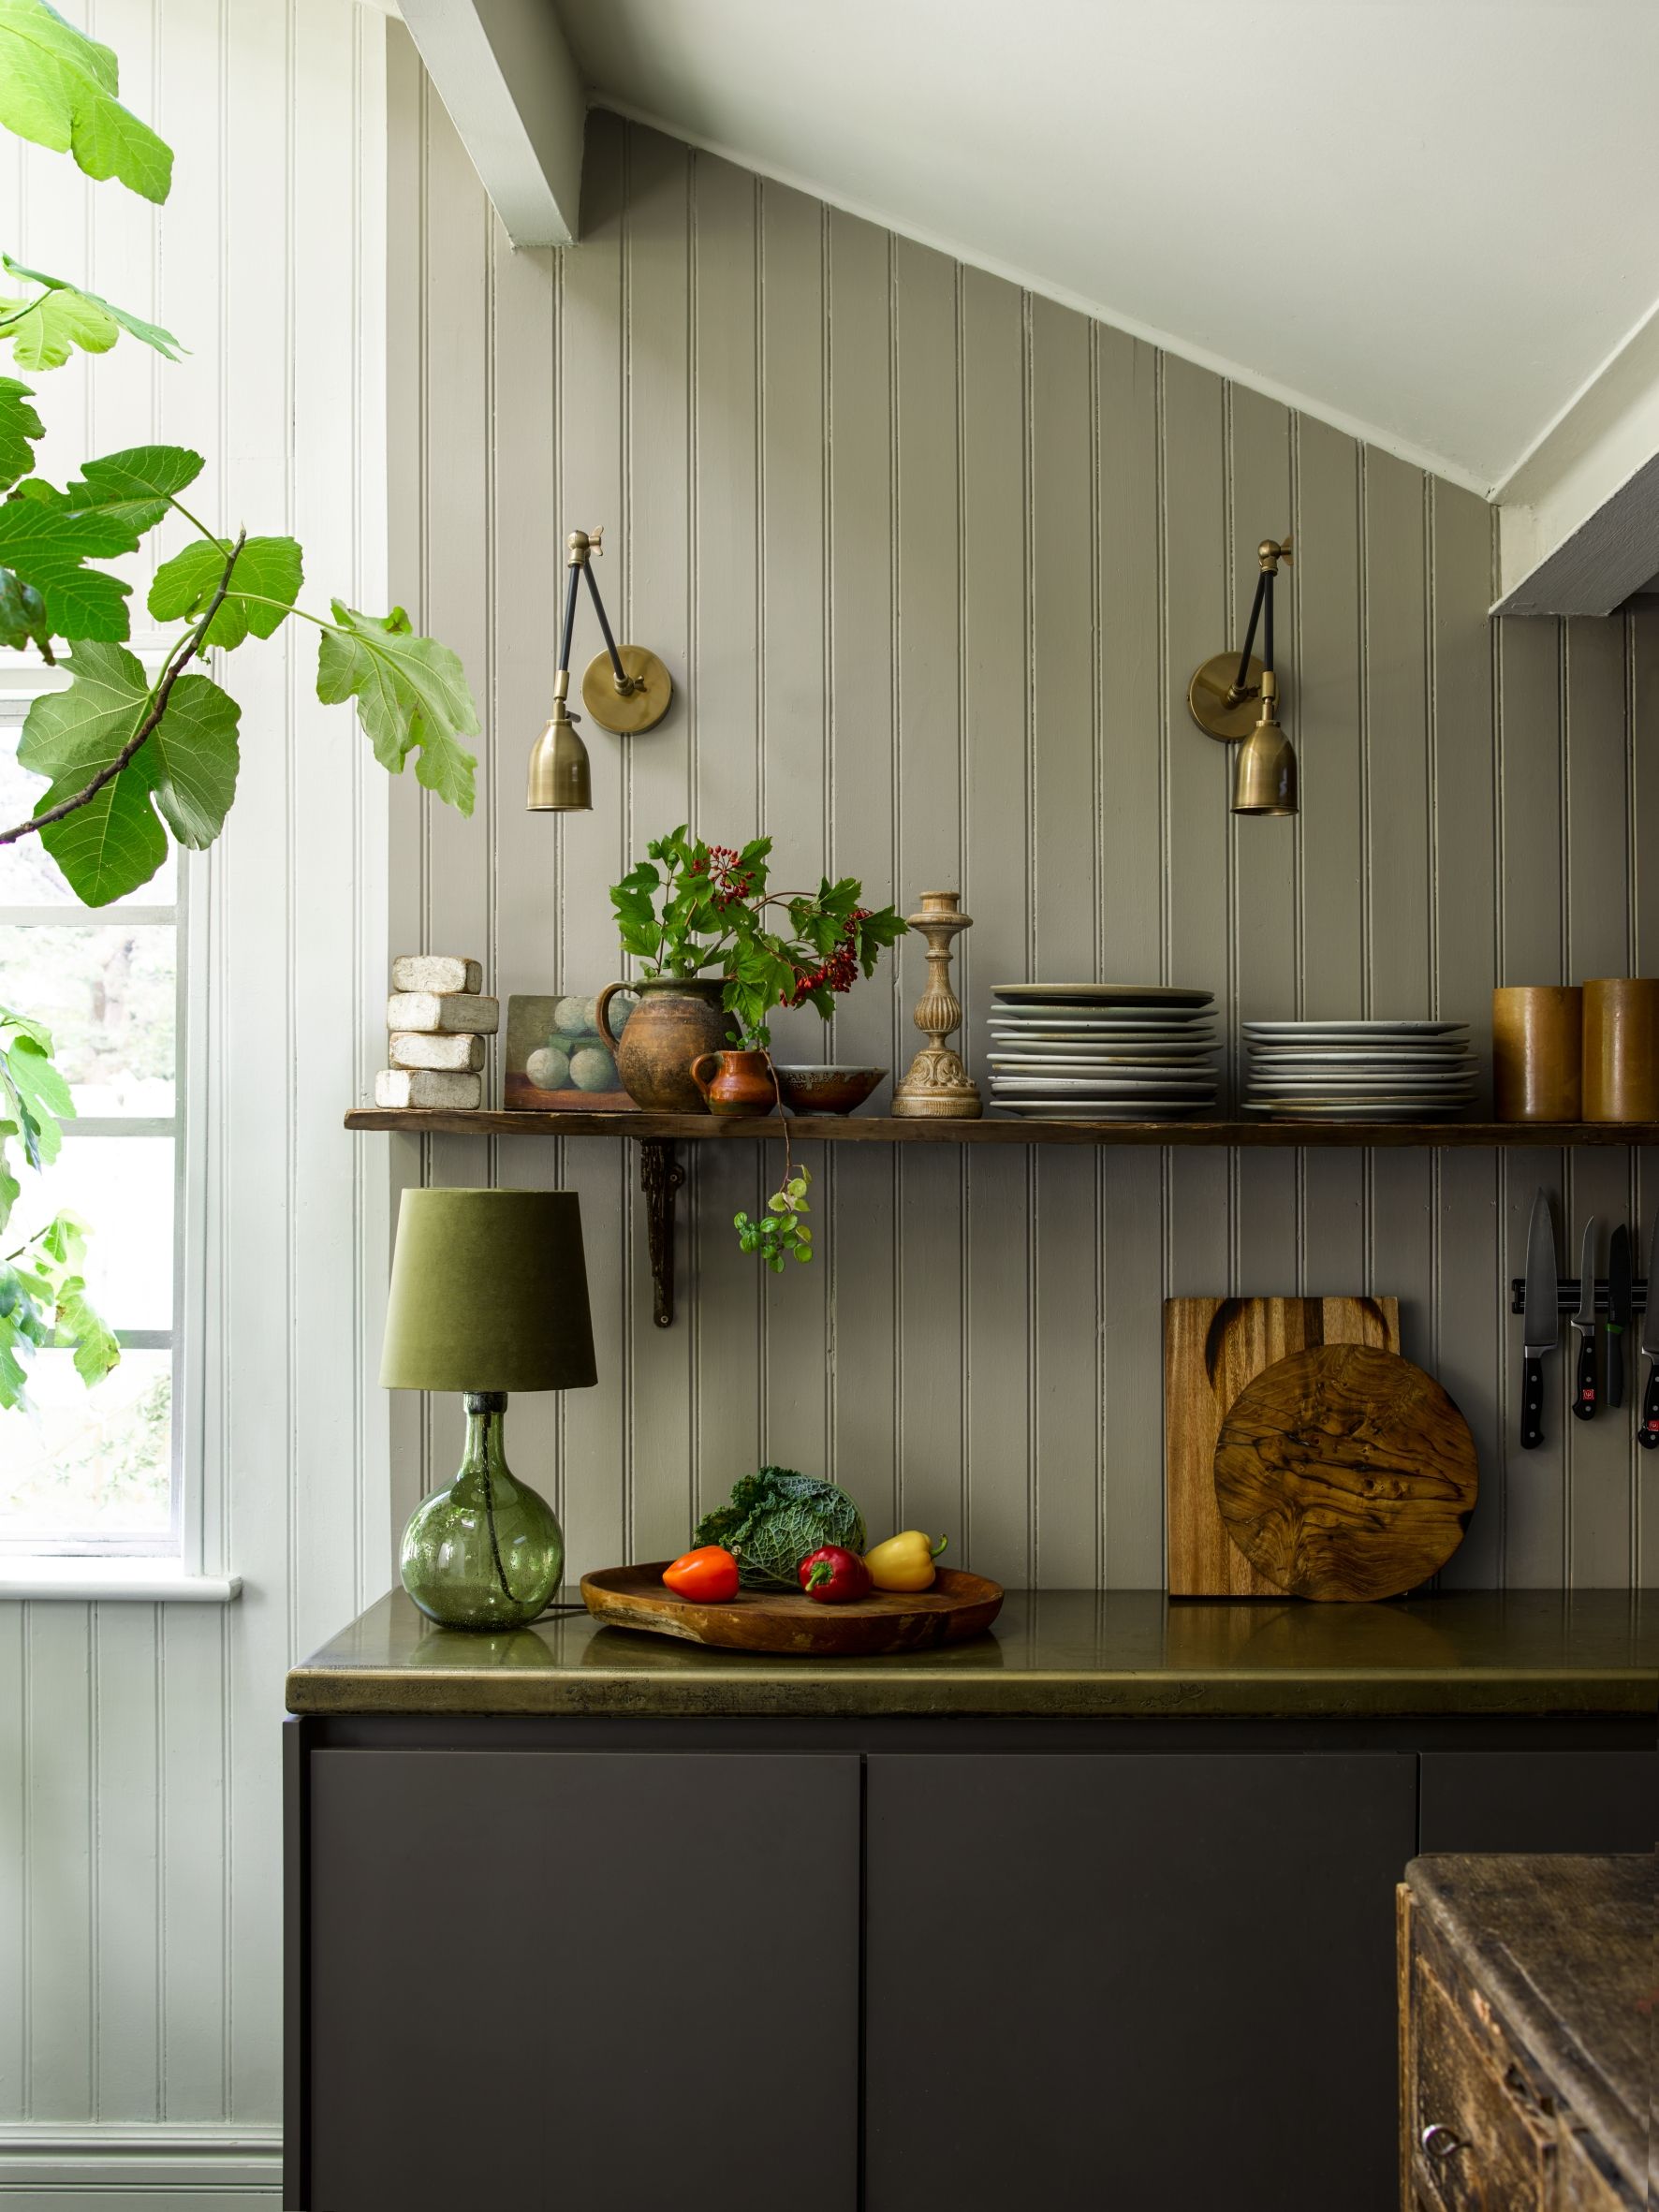 Green Kitchens   20 Inspiring Green Kitchen Ideas